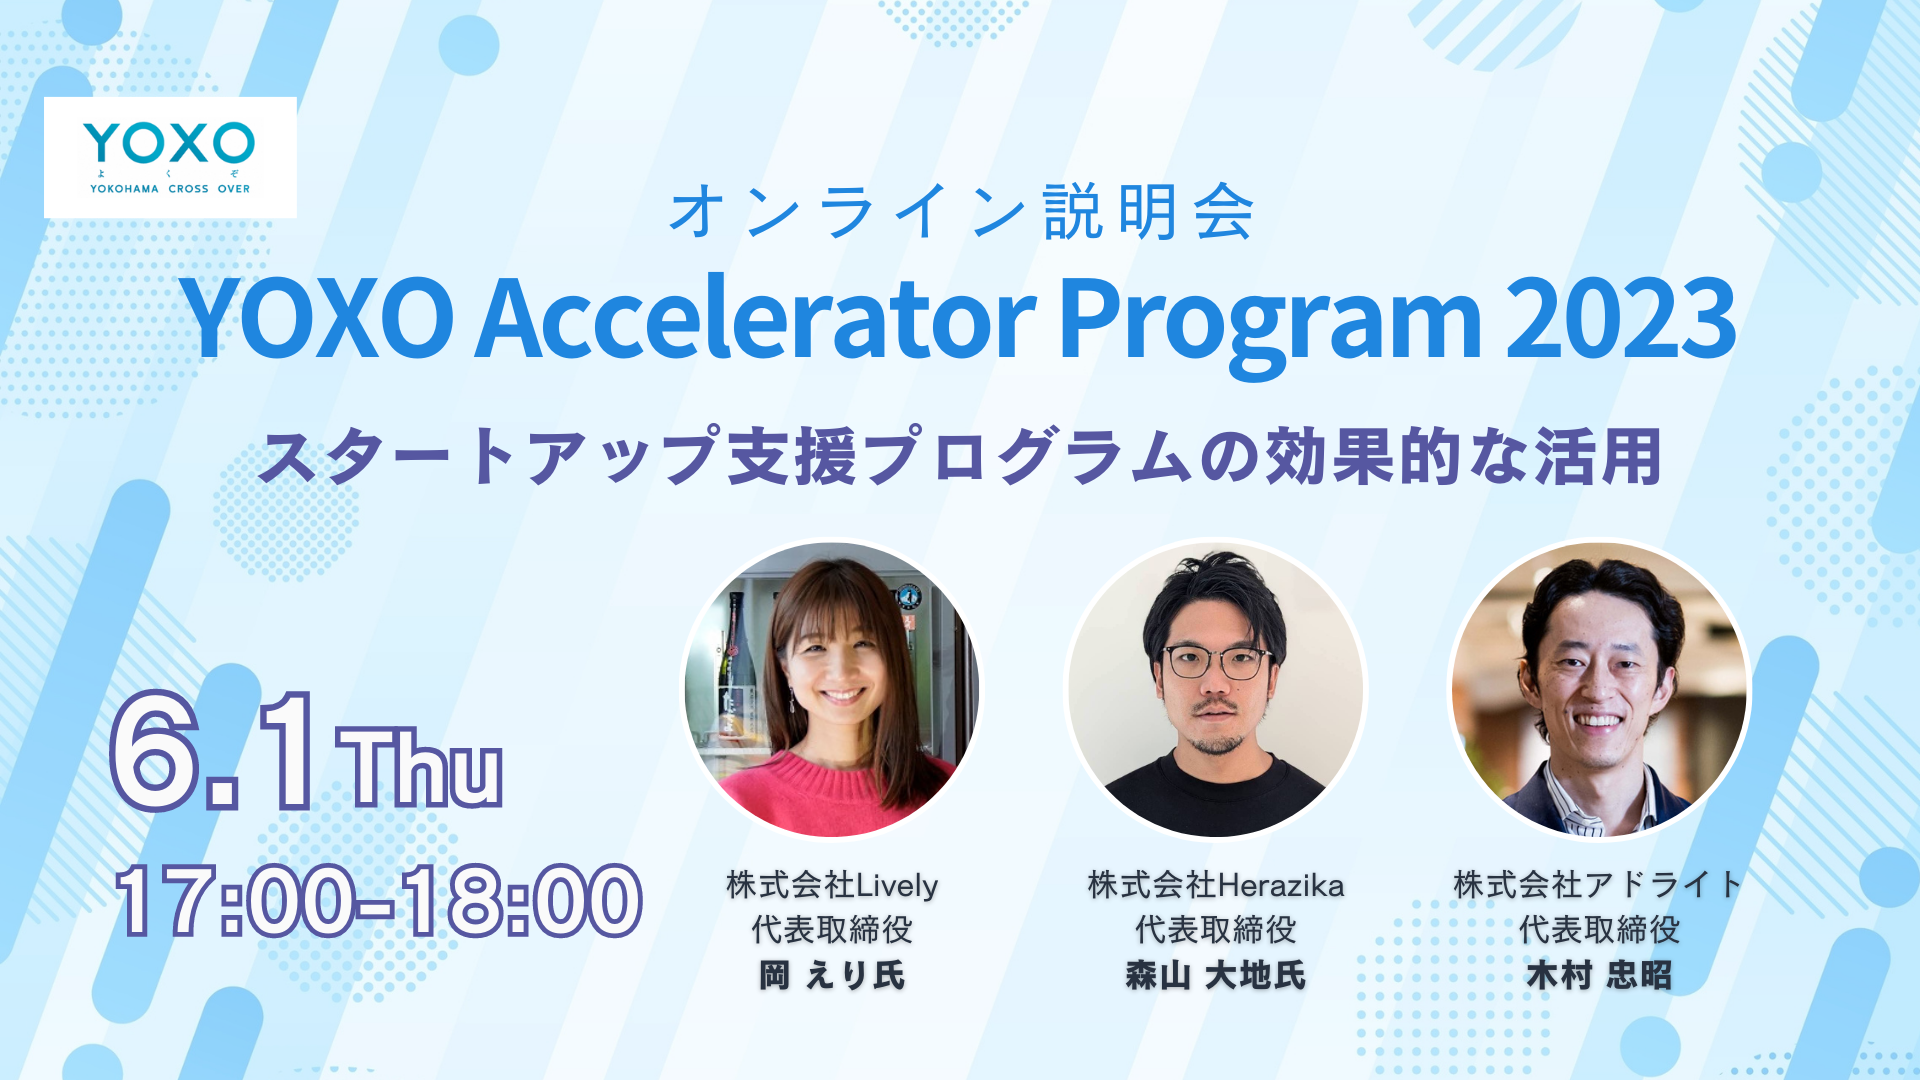 YOXO Accelerator Program 2023 Demo Day